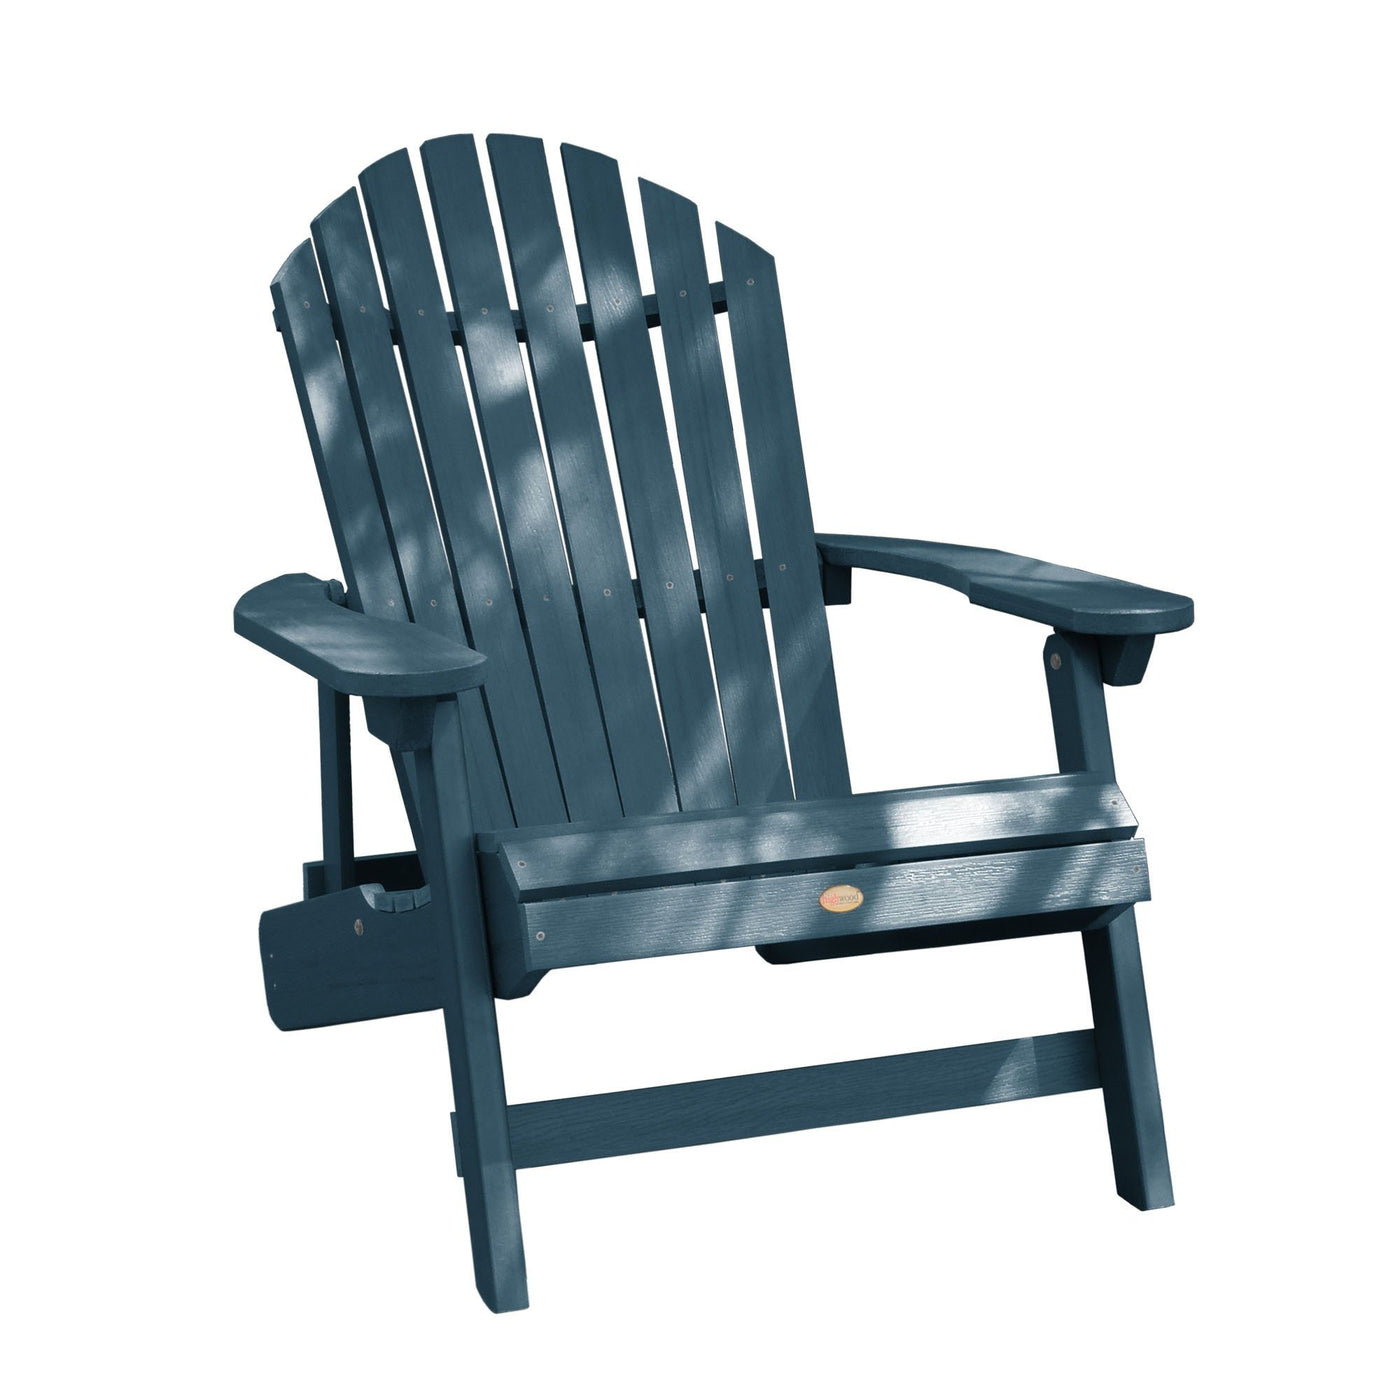 Refurbished King Hamilton Folding & Reclining Adirondack Chair Highwood USA Nantucket Blue 